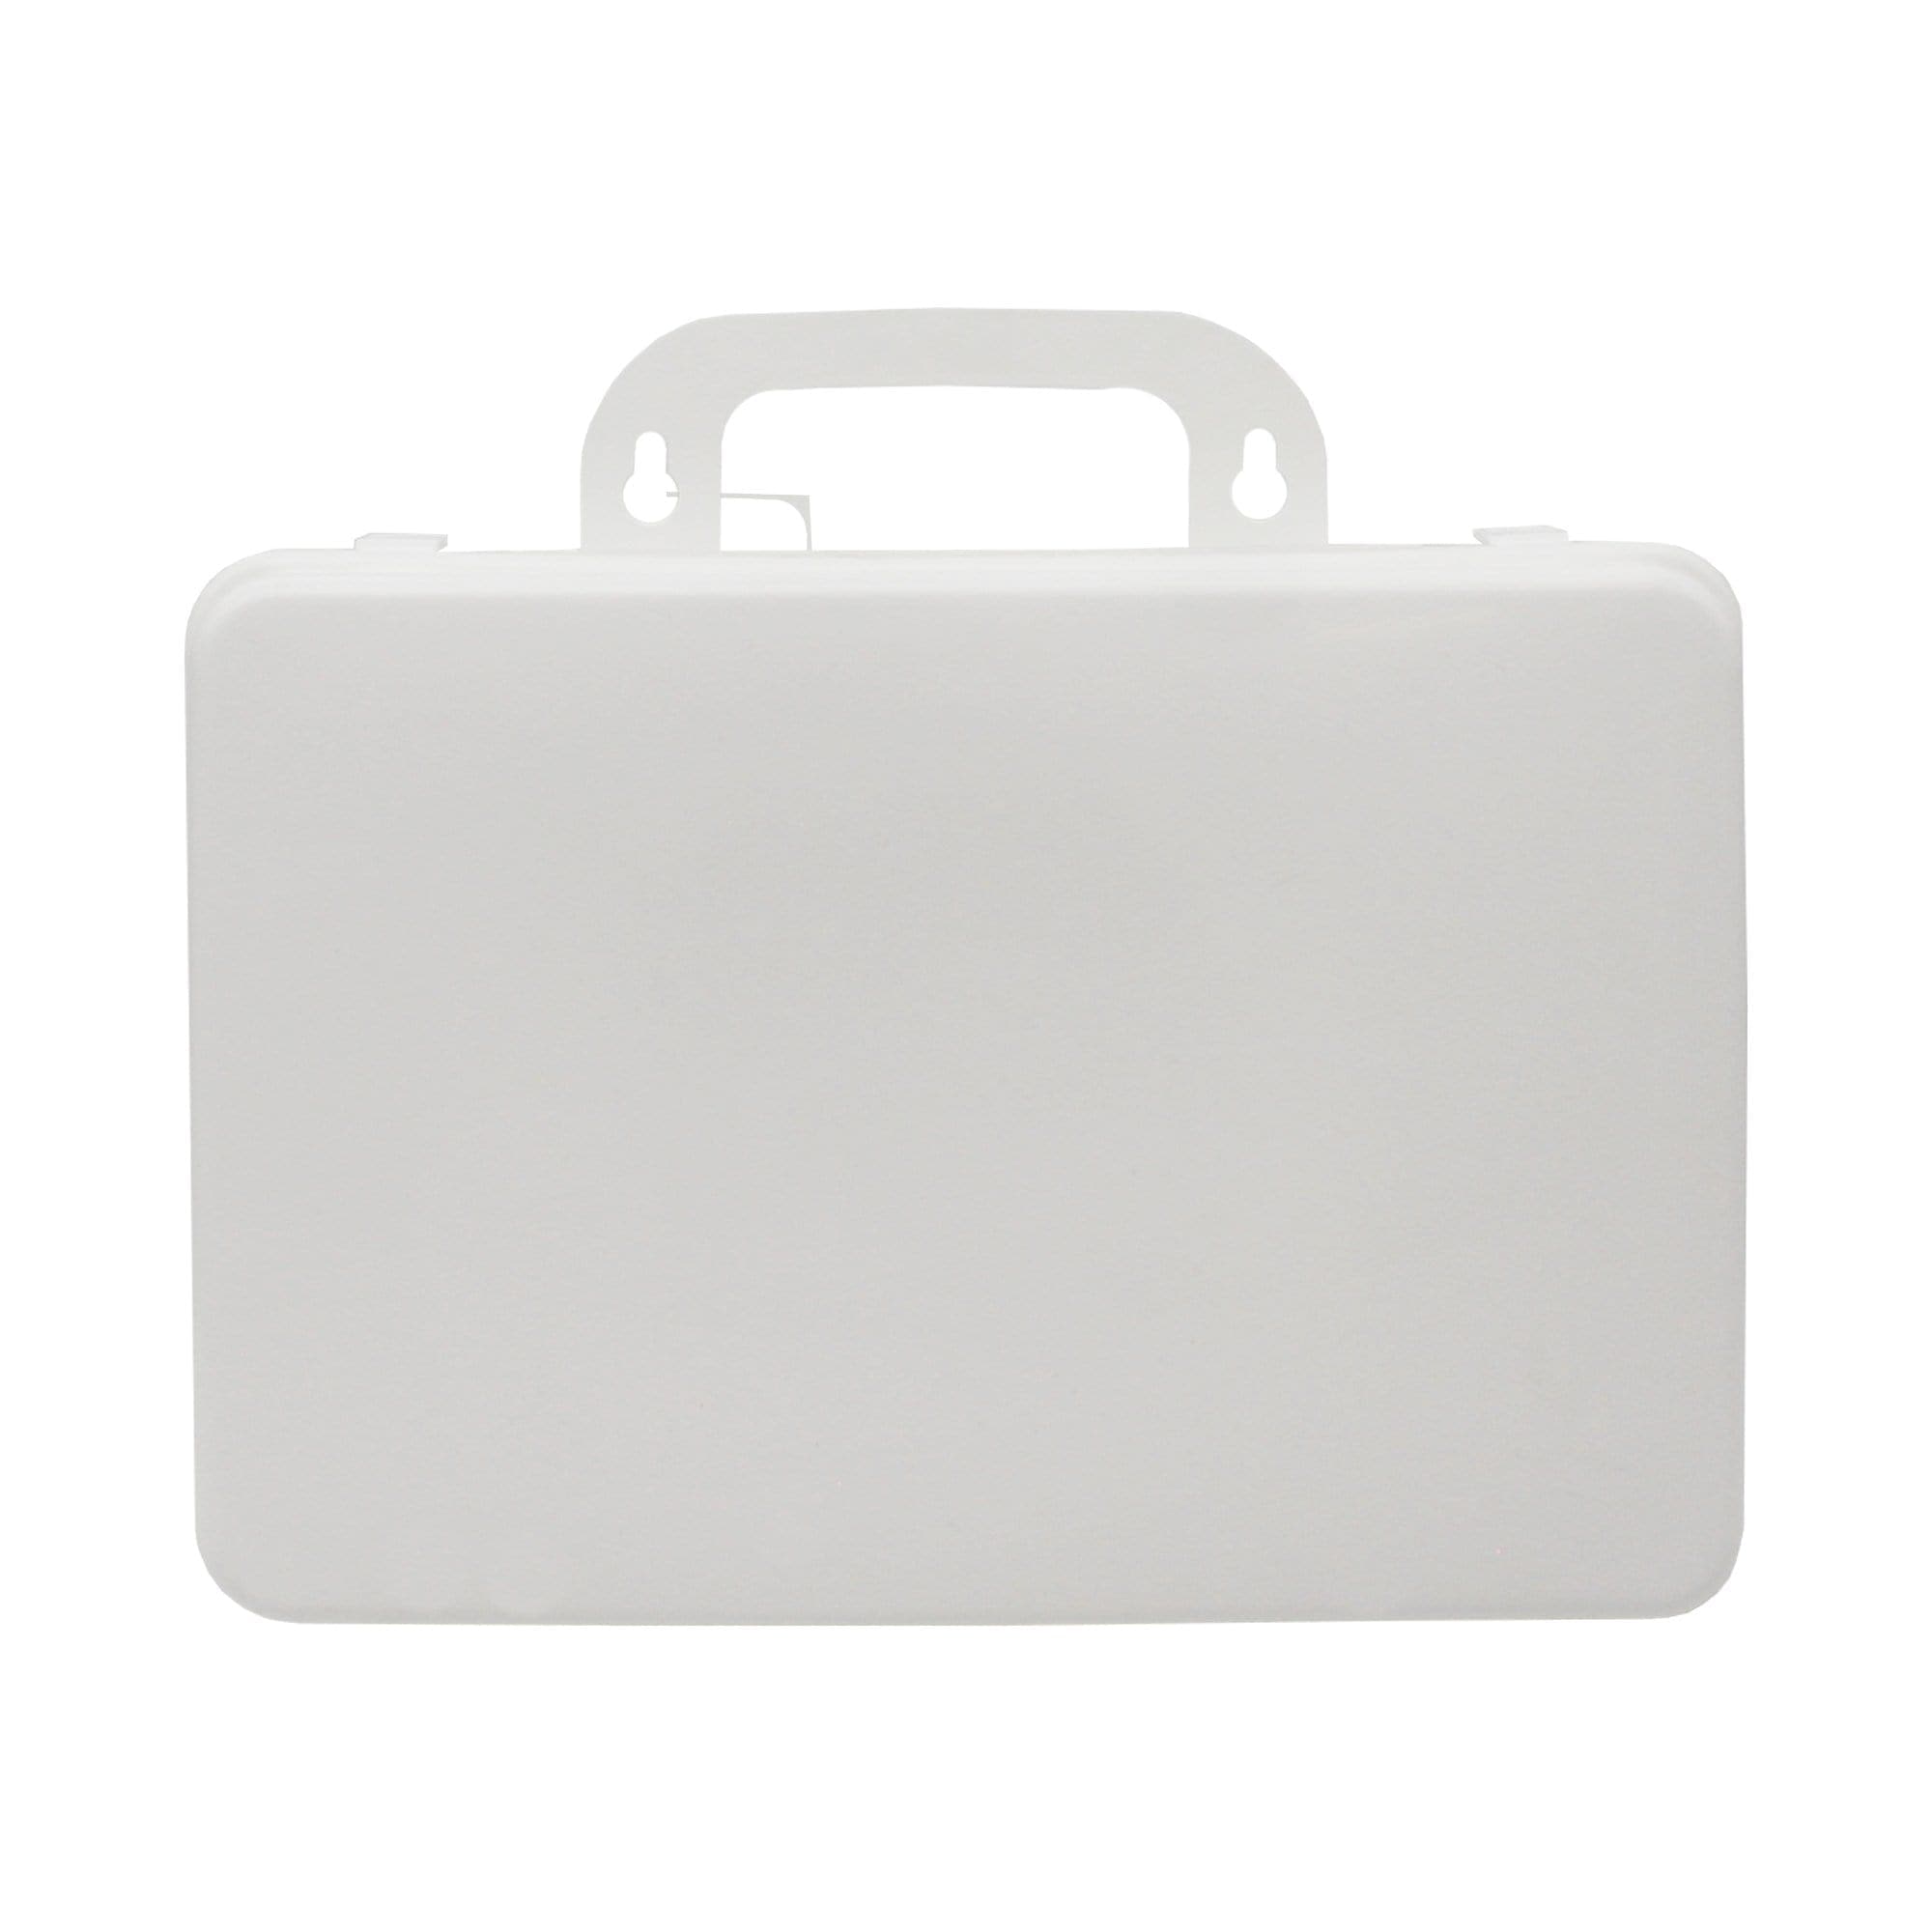 Sunisery Portable Empty First Aid Box Clear 2-Tray Plastic